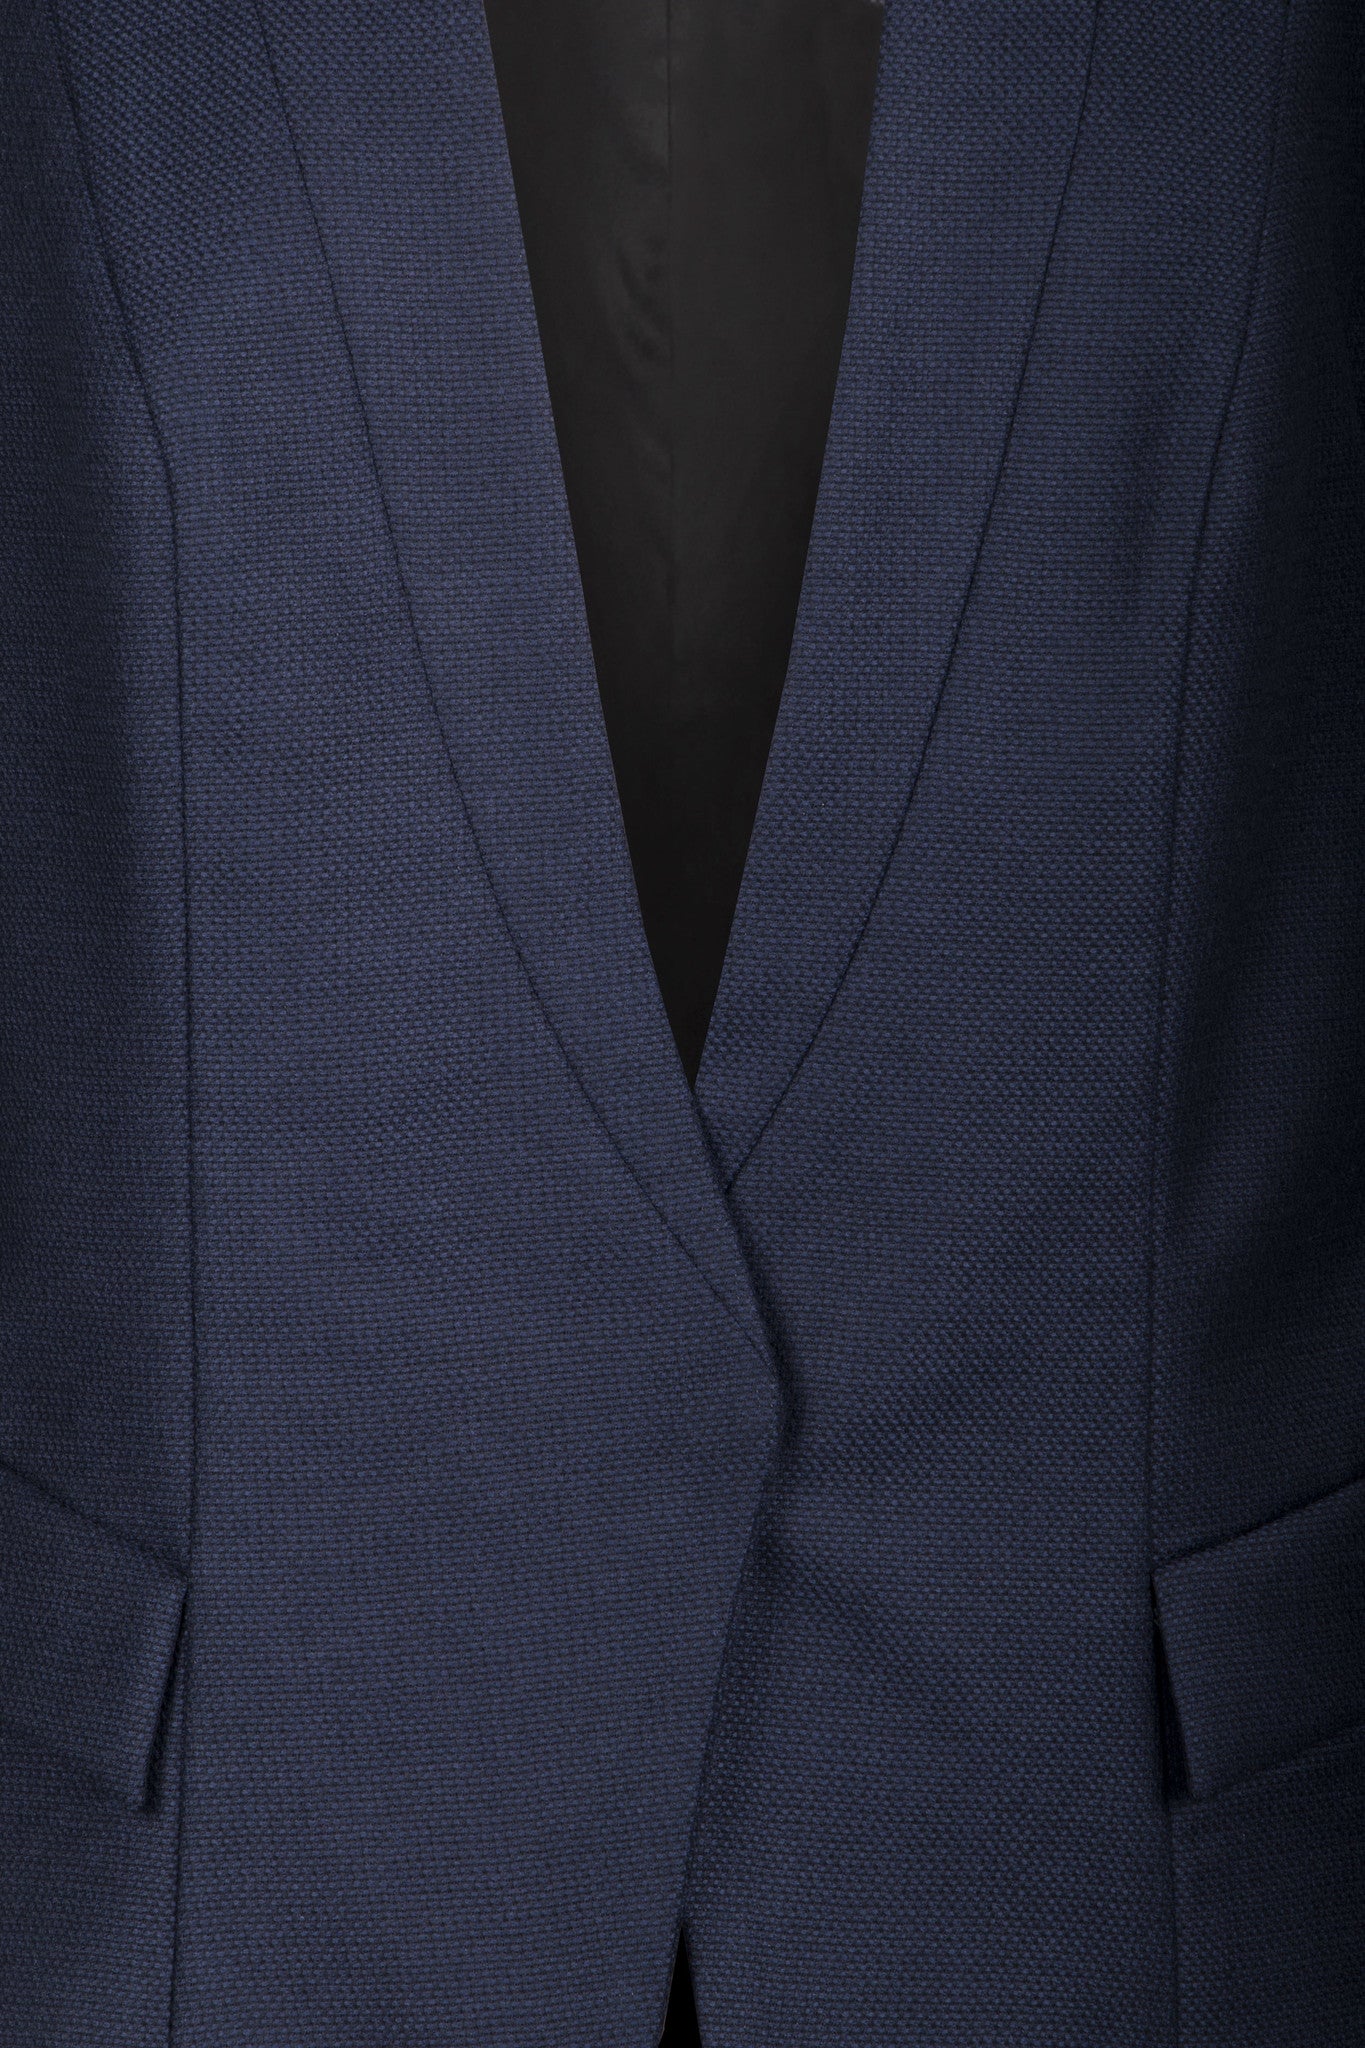 Single-snap navy blue wool jacket